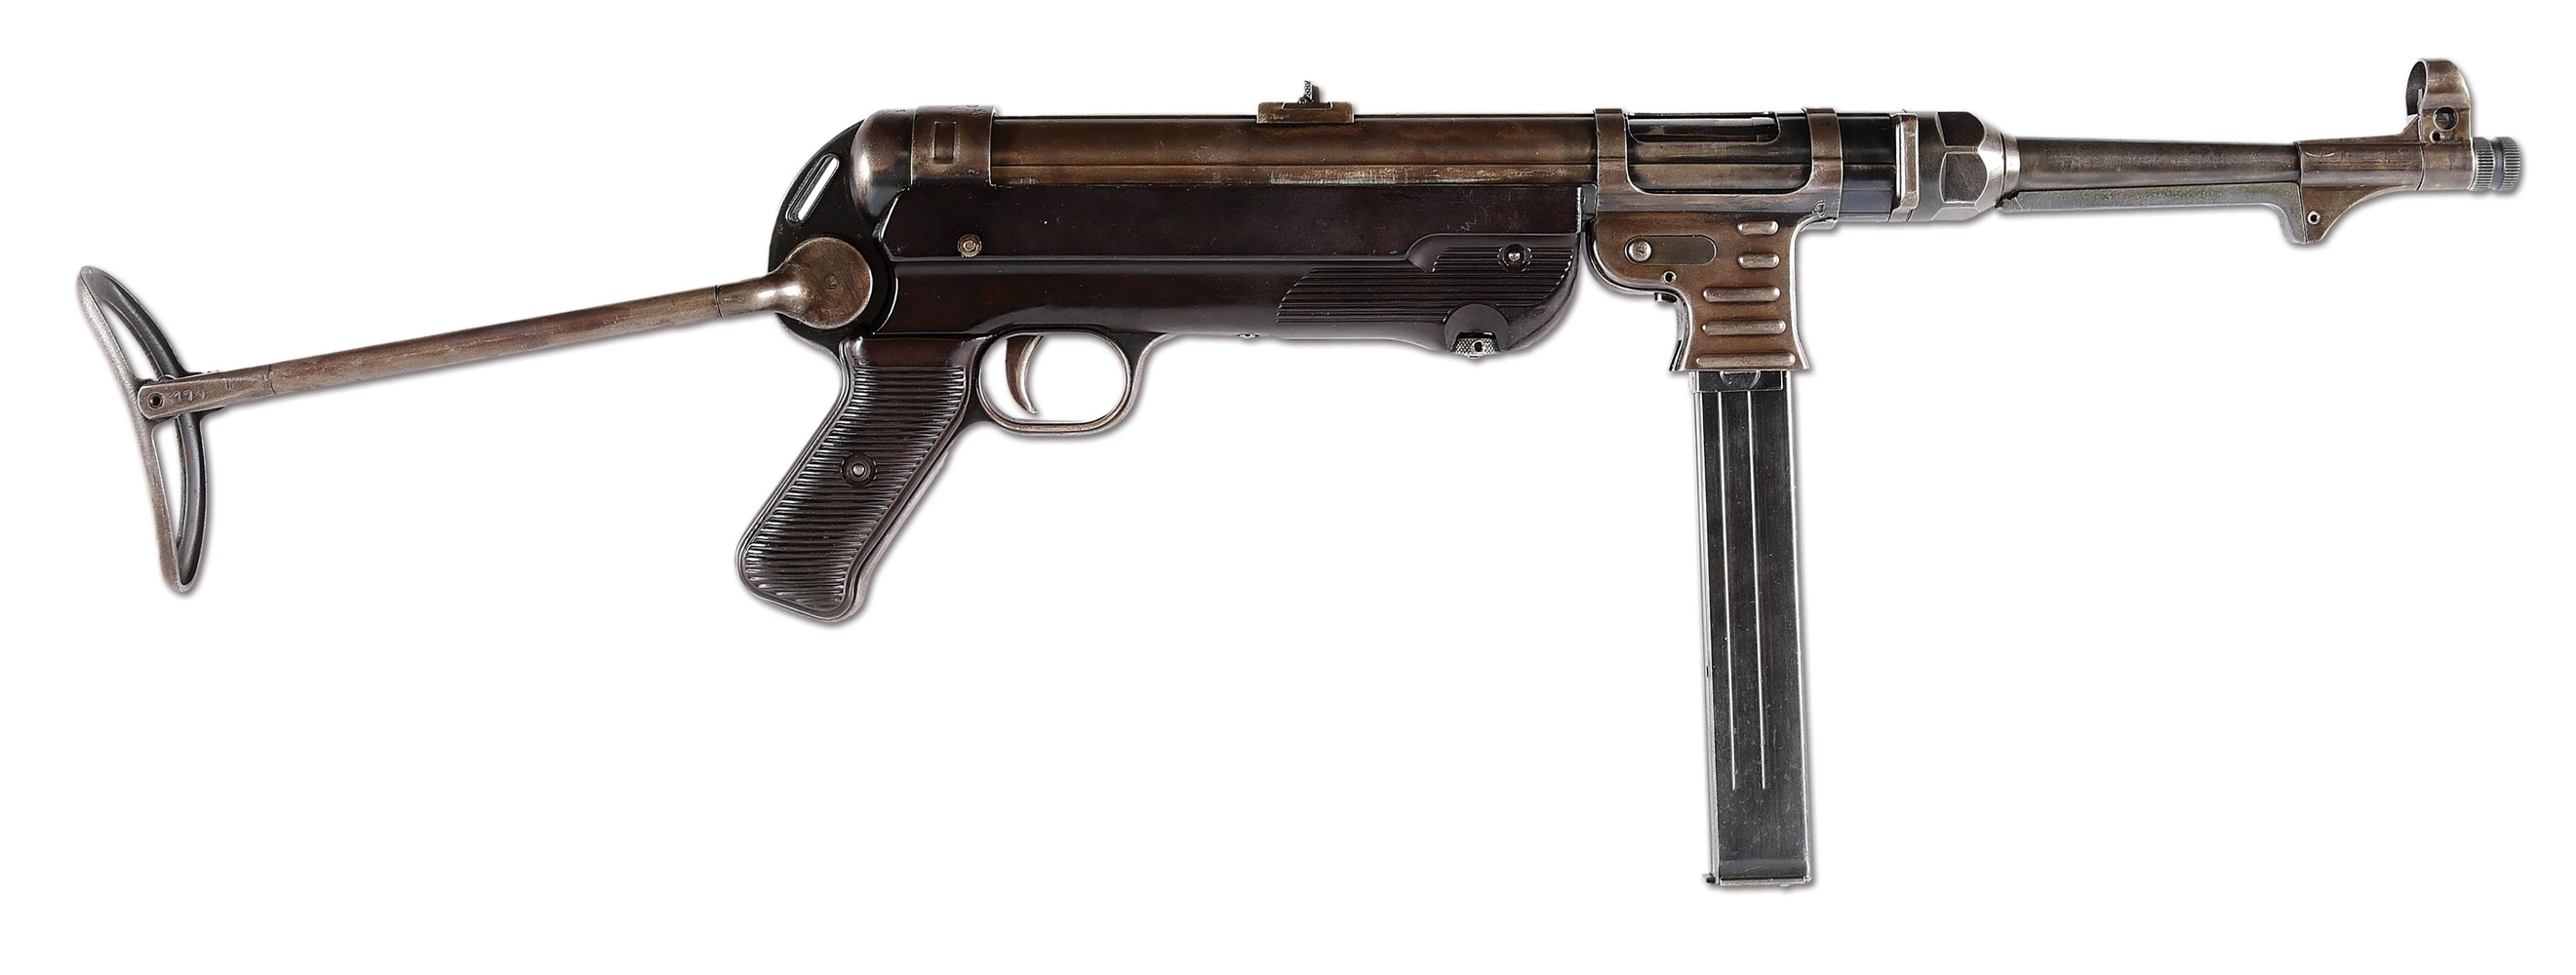 (N) ALWAYS DESIRABLE GERMAN WORLD WAR II STEYR-DAIMLER-PUCH "BNZ/41" CODE MP40 MACHINE GUN (CURIO & RELIC).